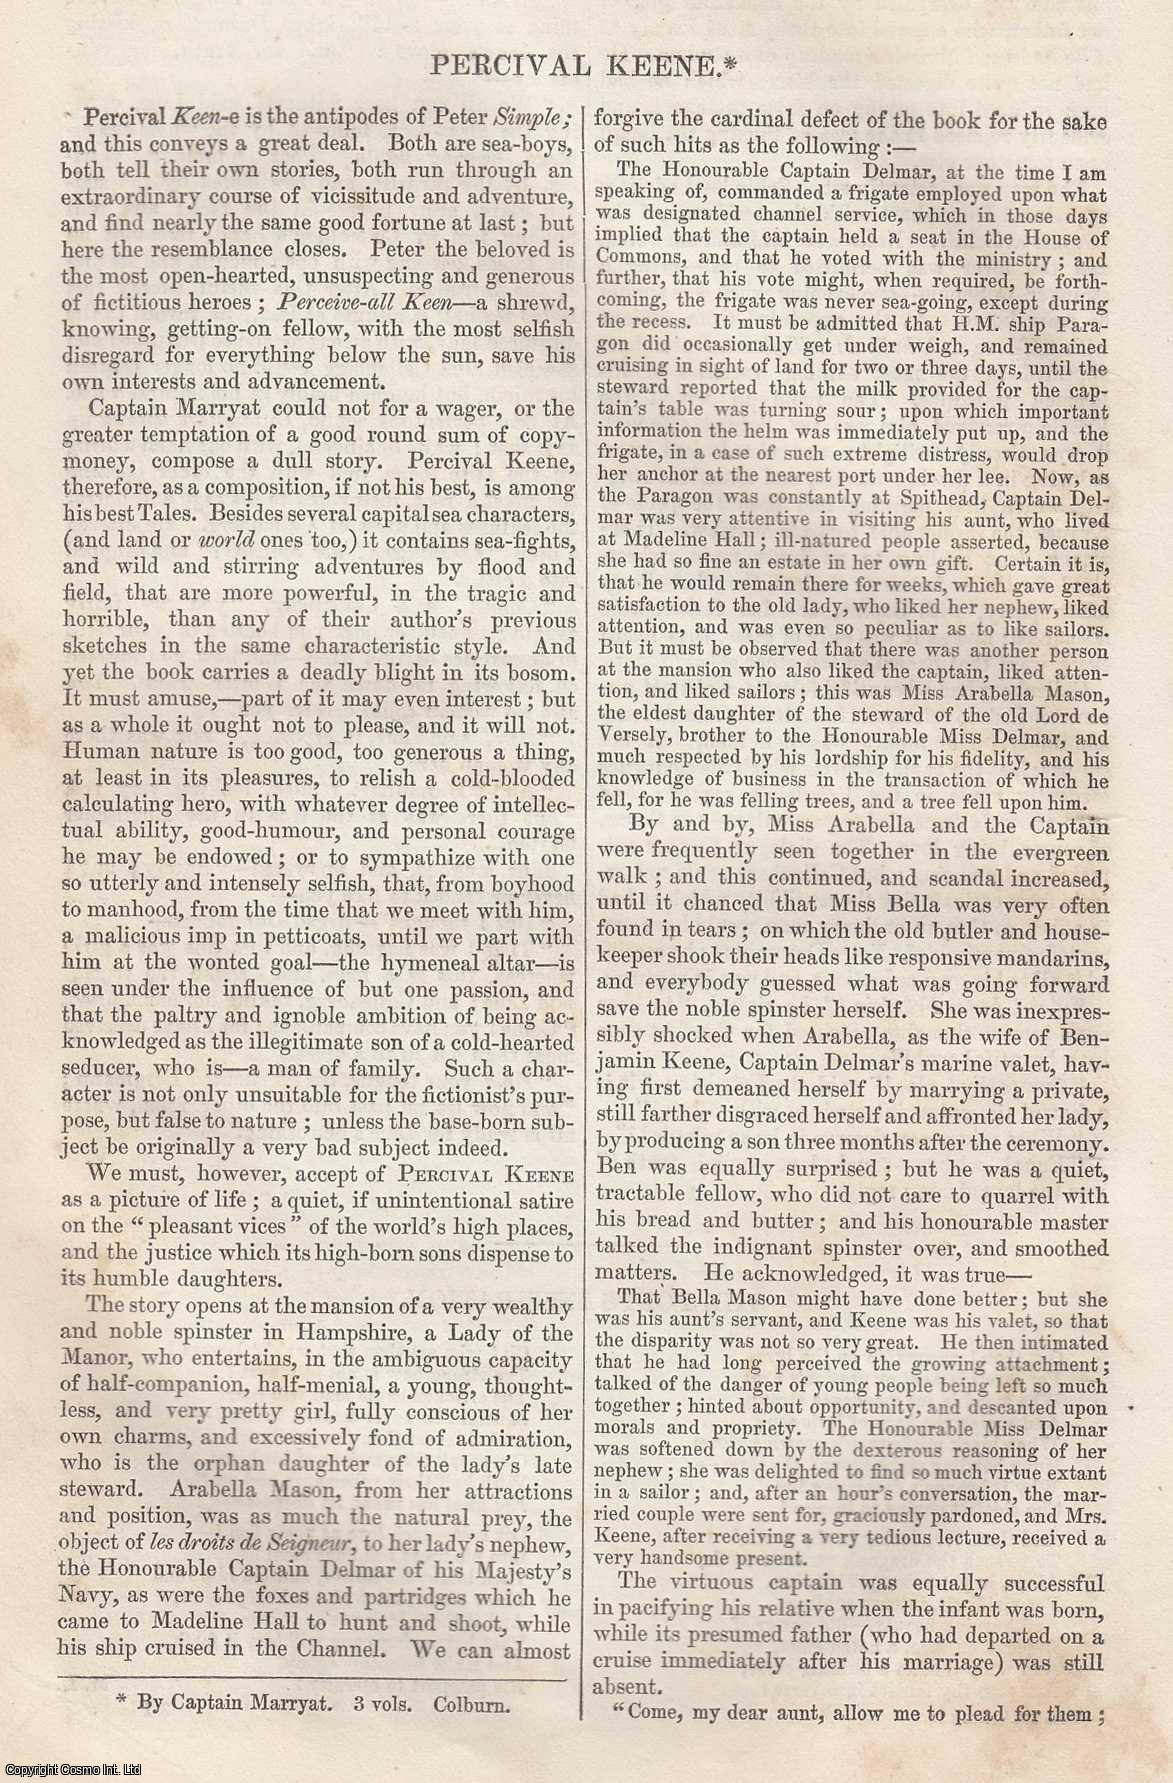 Johnstone, Christian - Percival Keene [By Capt. Marryat]. An original article from Tait's Edinburgh Magazine, 1842.